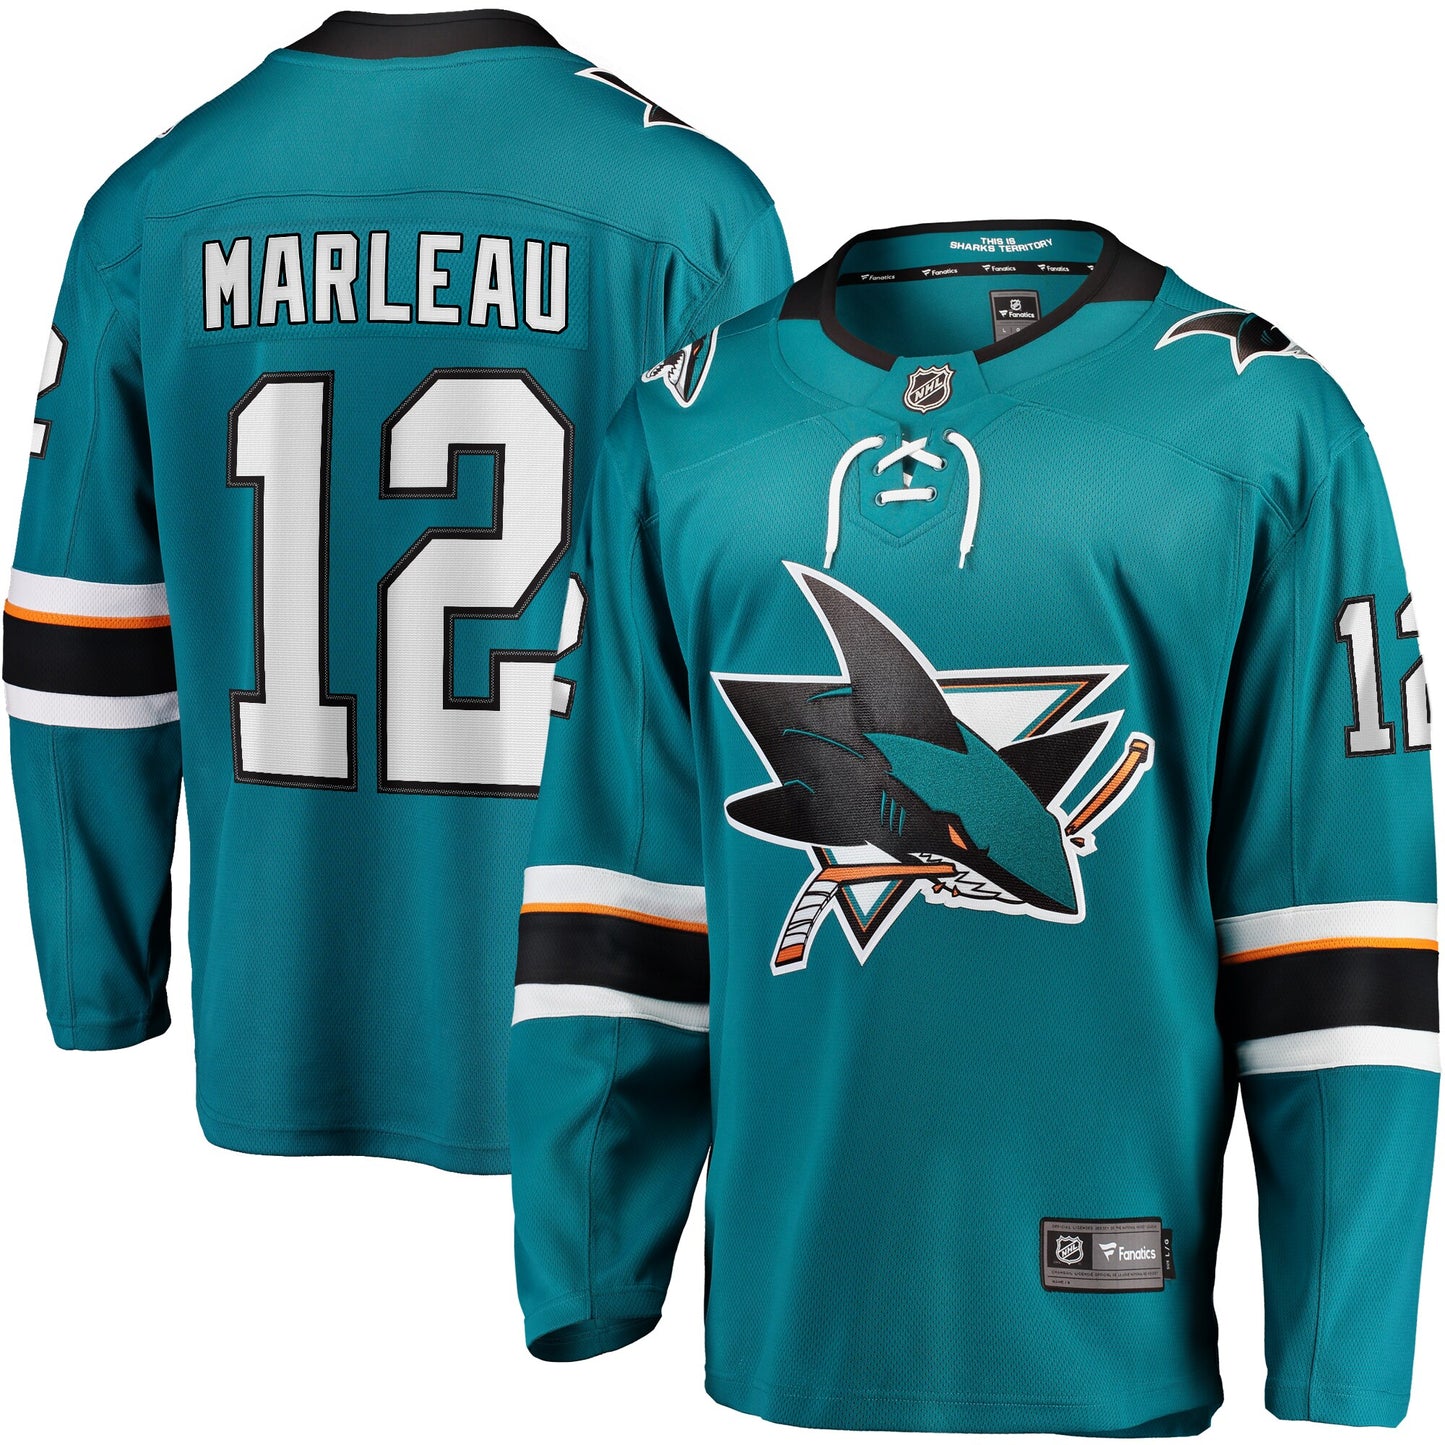 Patrick Marleau San Jose Sharks Fanatics Branded Replica Player Jersey - Teal